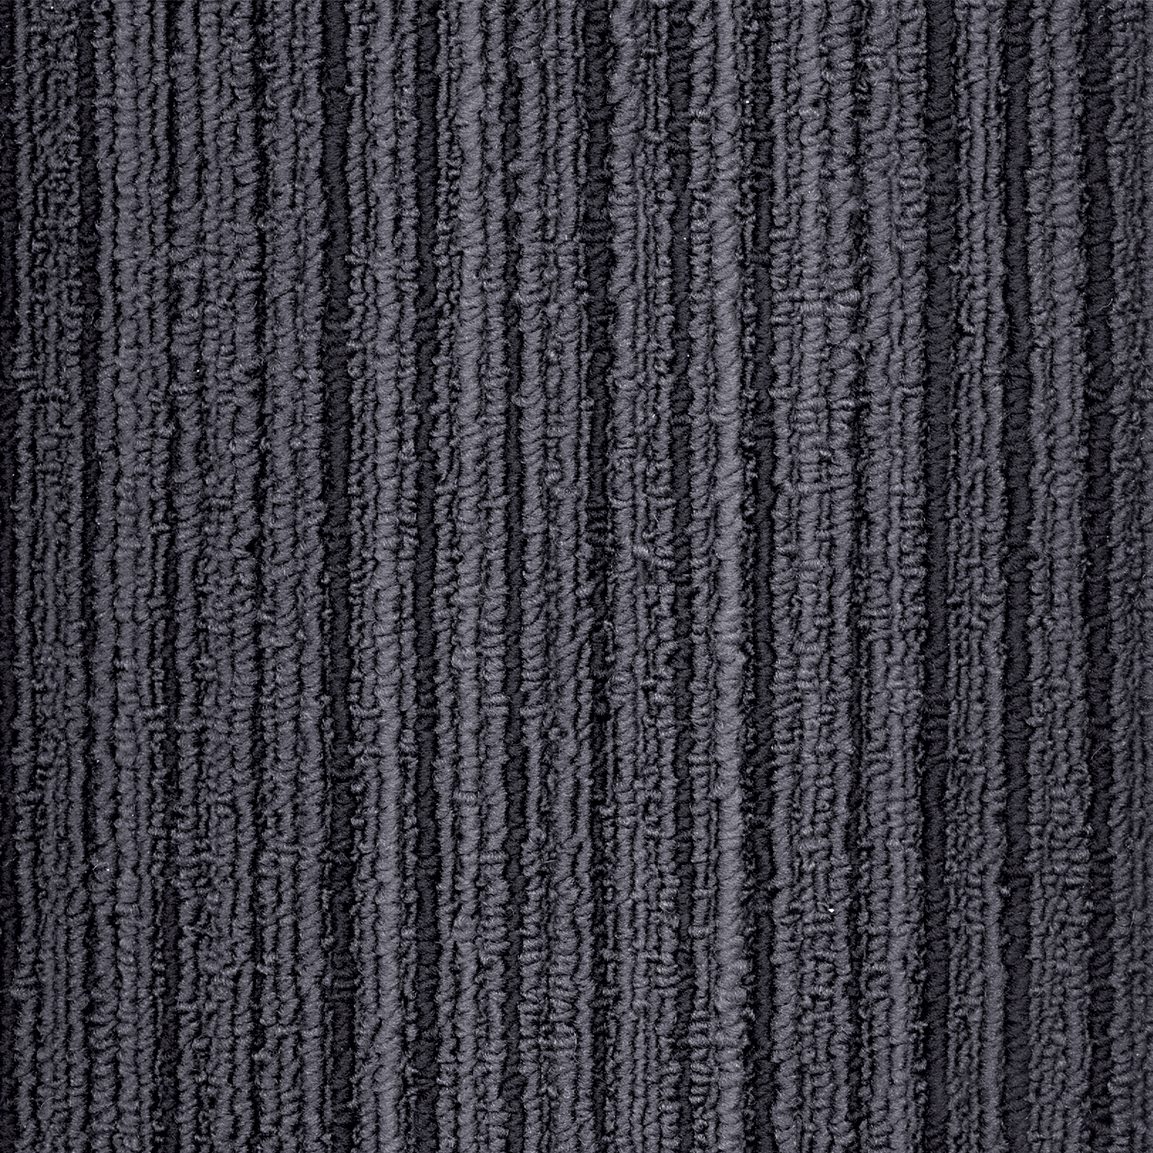 Taurus Amethyst | Loop Pile, Polypropylene Carpet Tiles